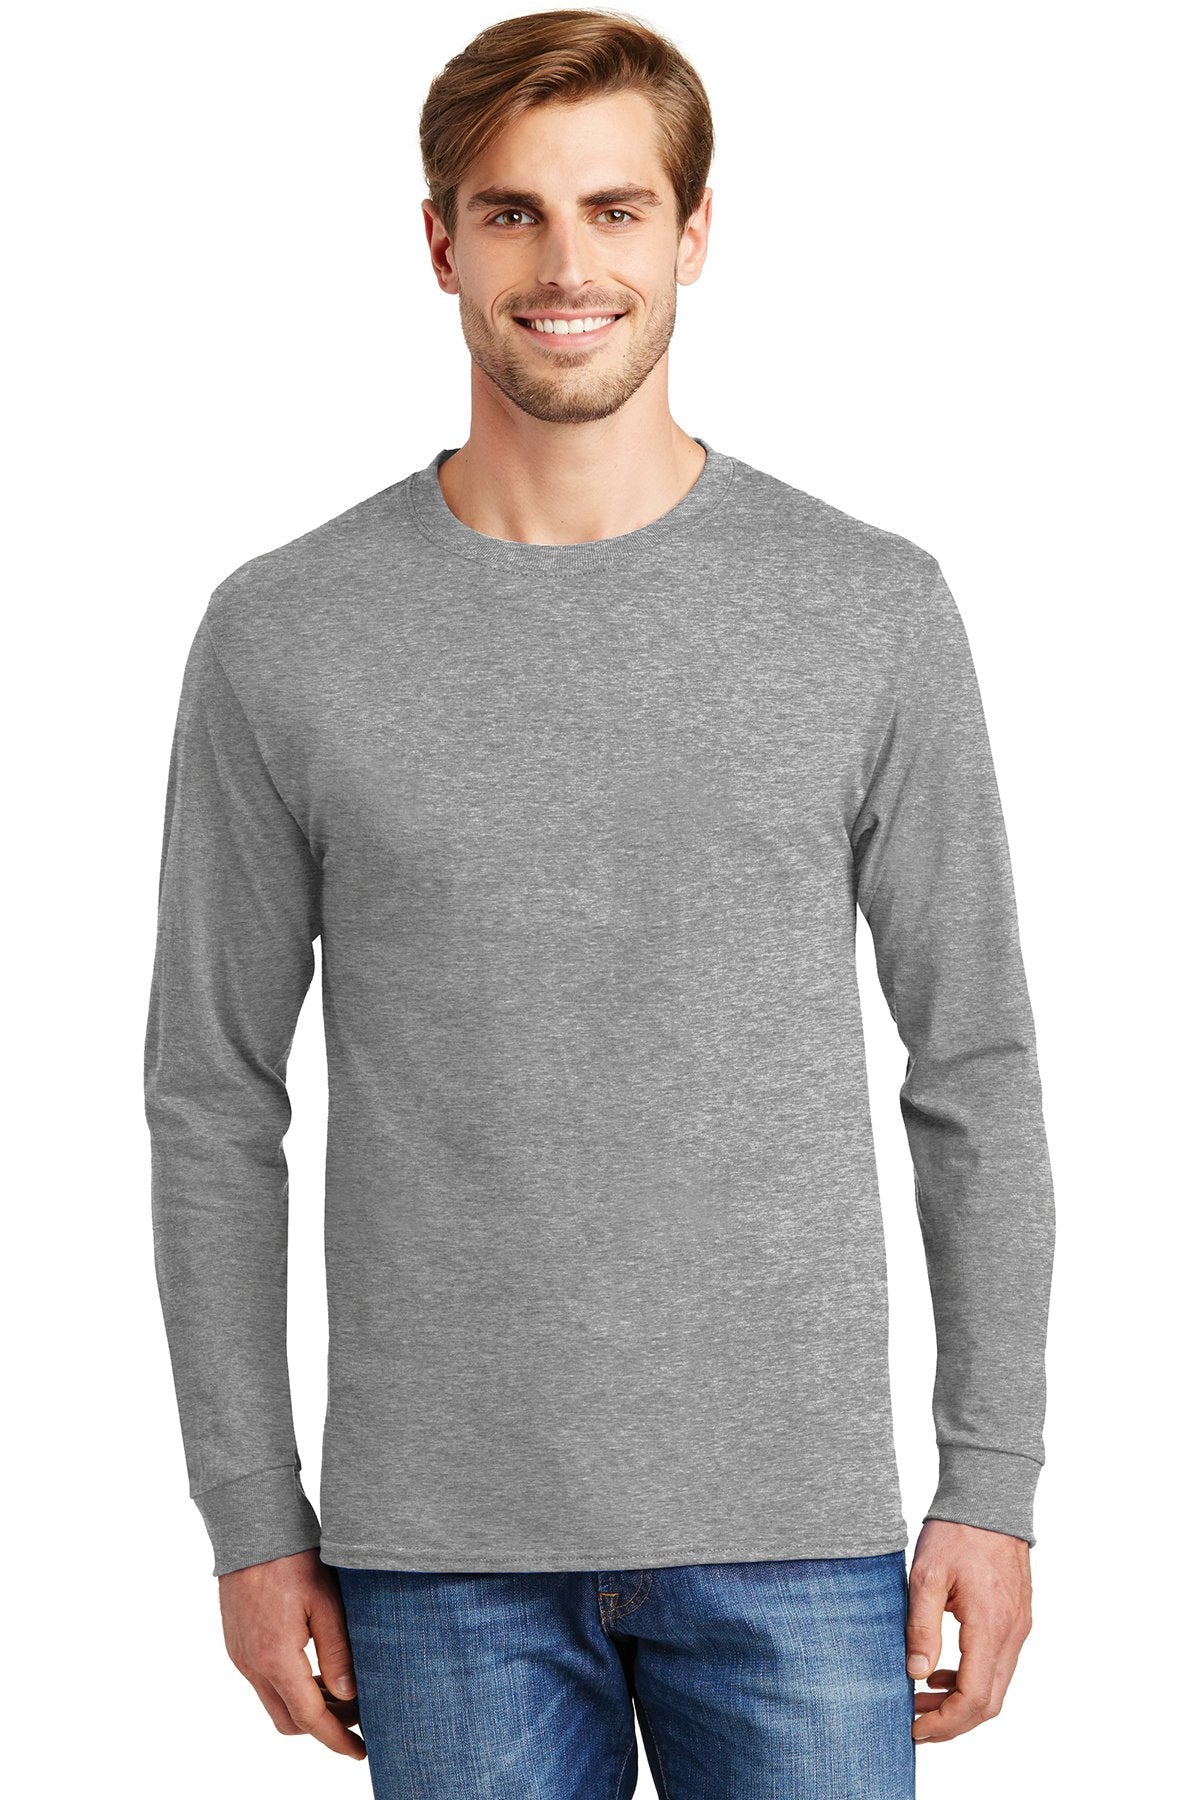 Hanes Tagless Cotton Long Sleeve T Shirt in Light Steel, add a custom ...